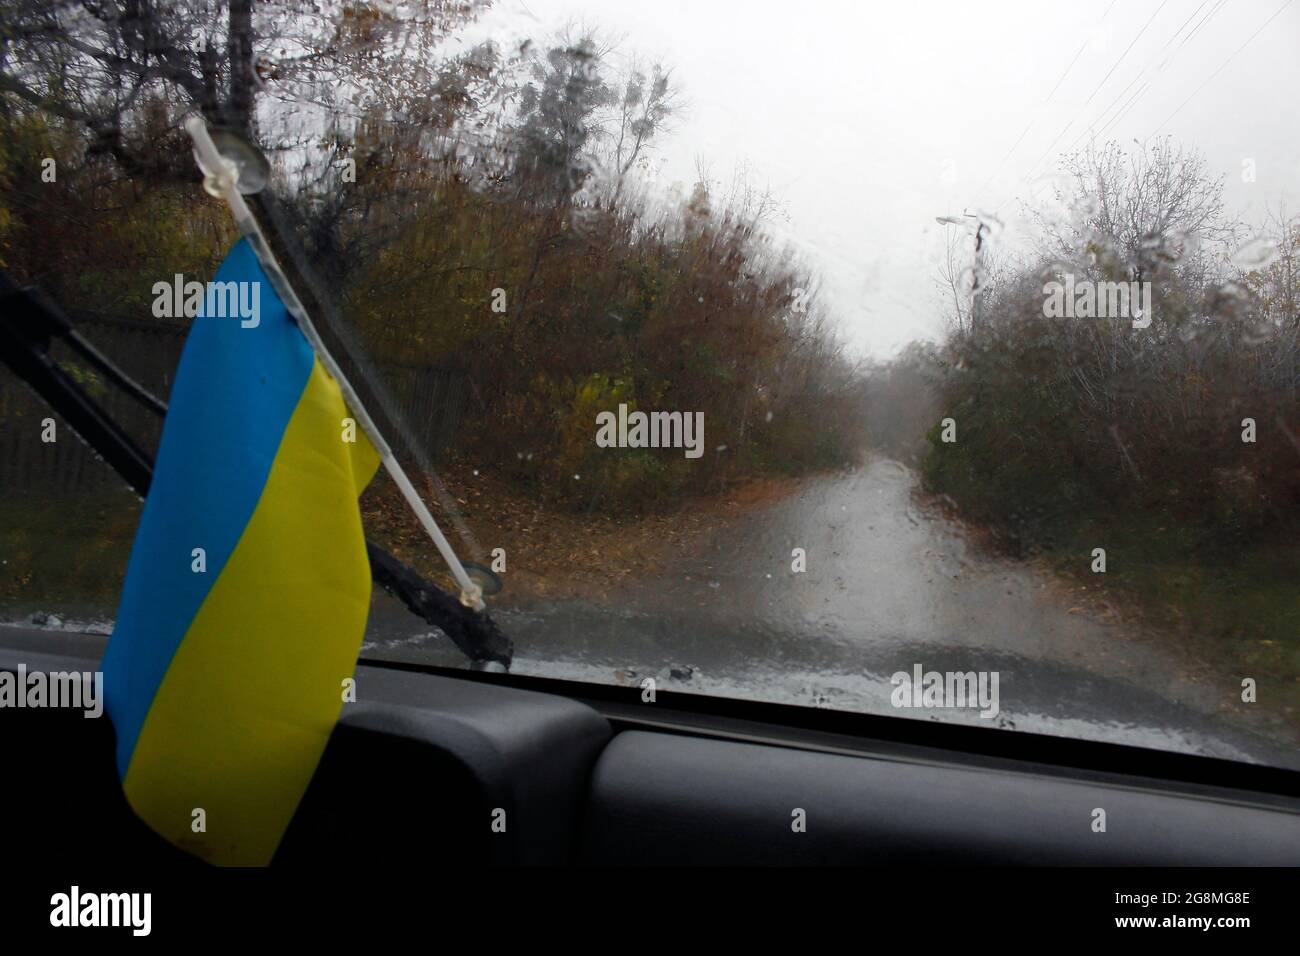 The Ukrainian flag is mounted on the windshield of the car. It's rain, autumn. Stock Photo